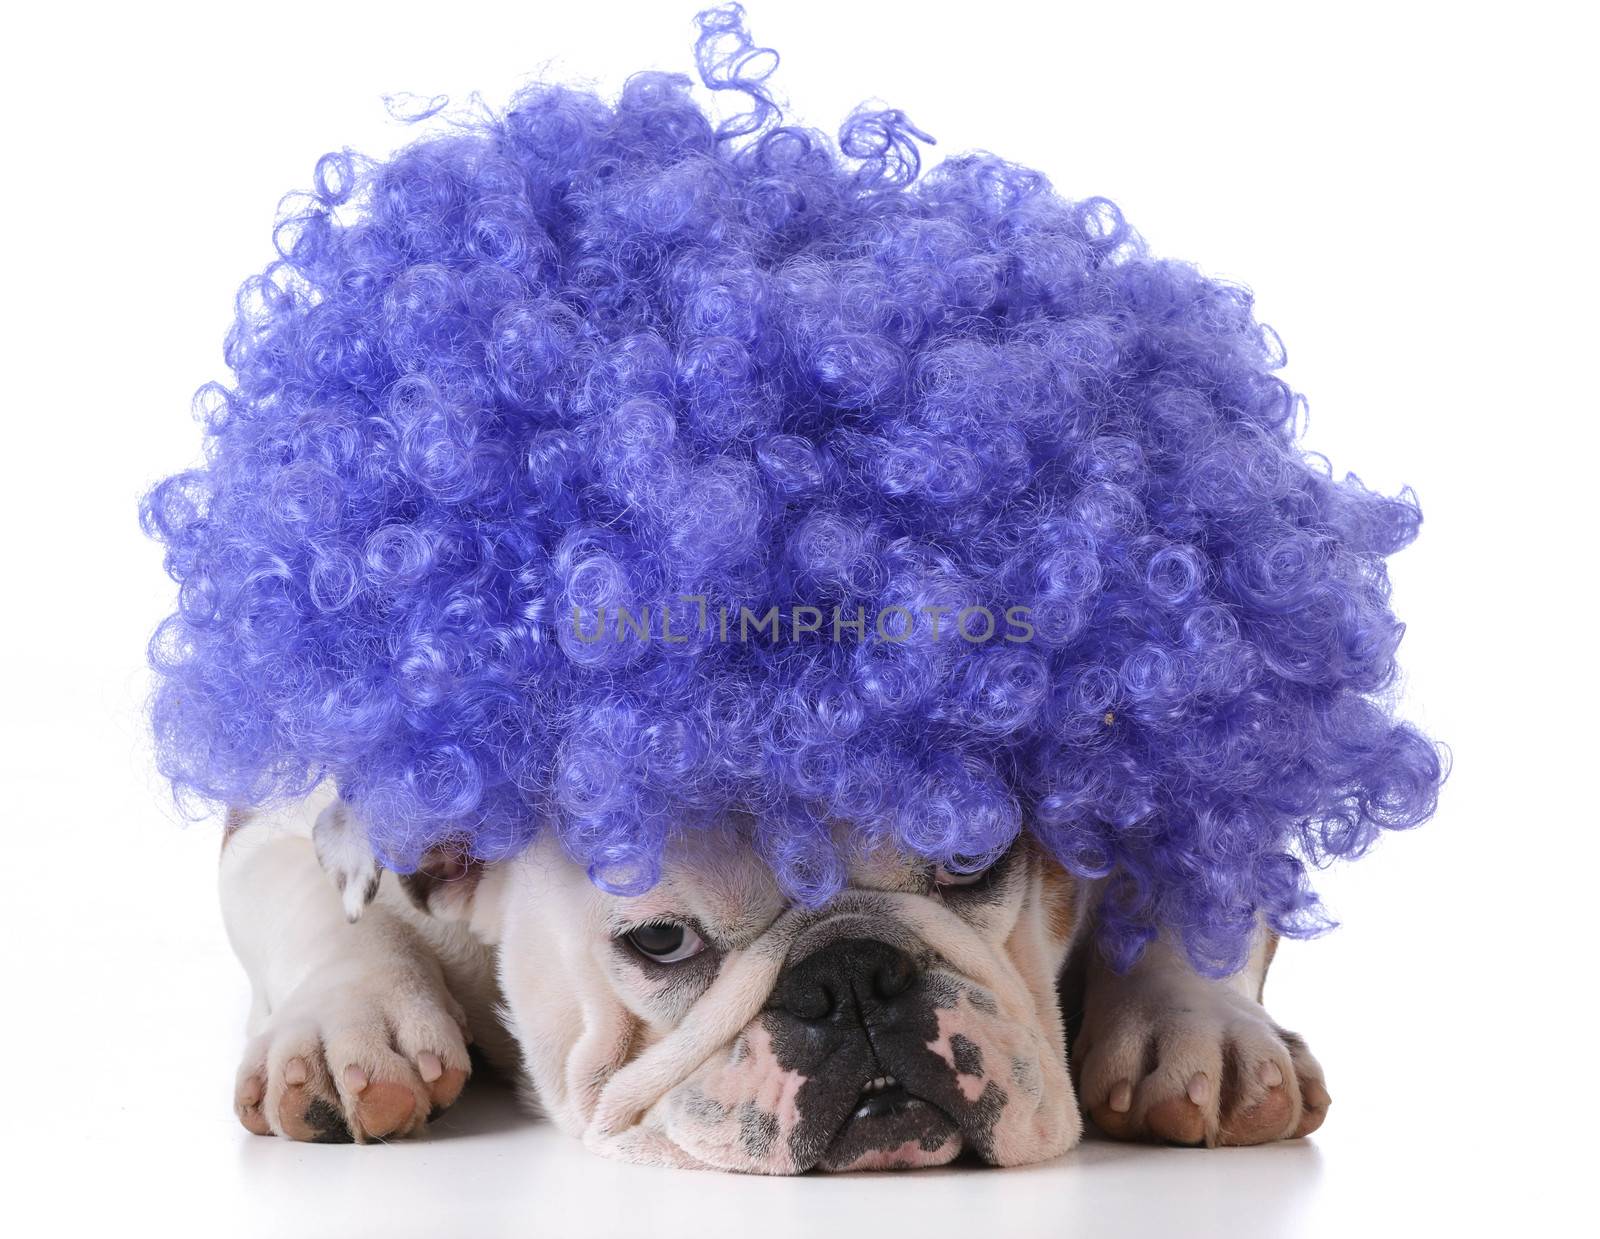 funny dog - bulldog wearing clown wig on white background